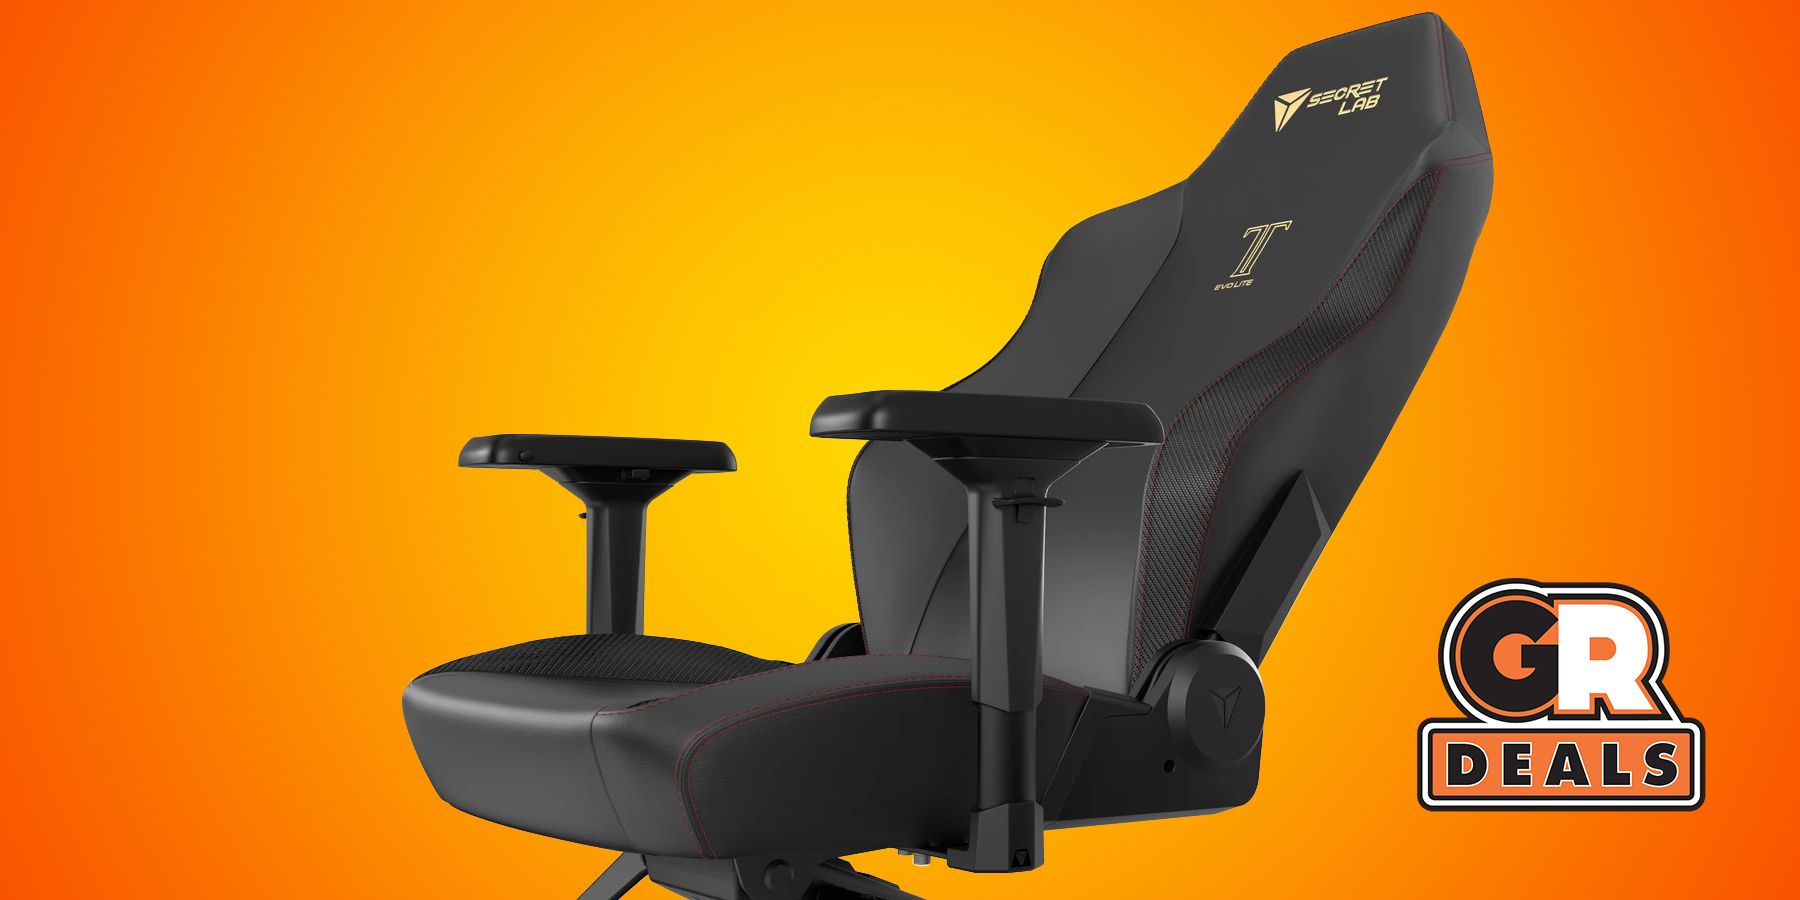  Secretlab Titan Evo Black Gaming Chair - Reclining